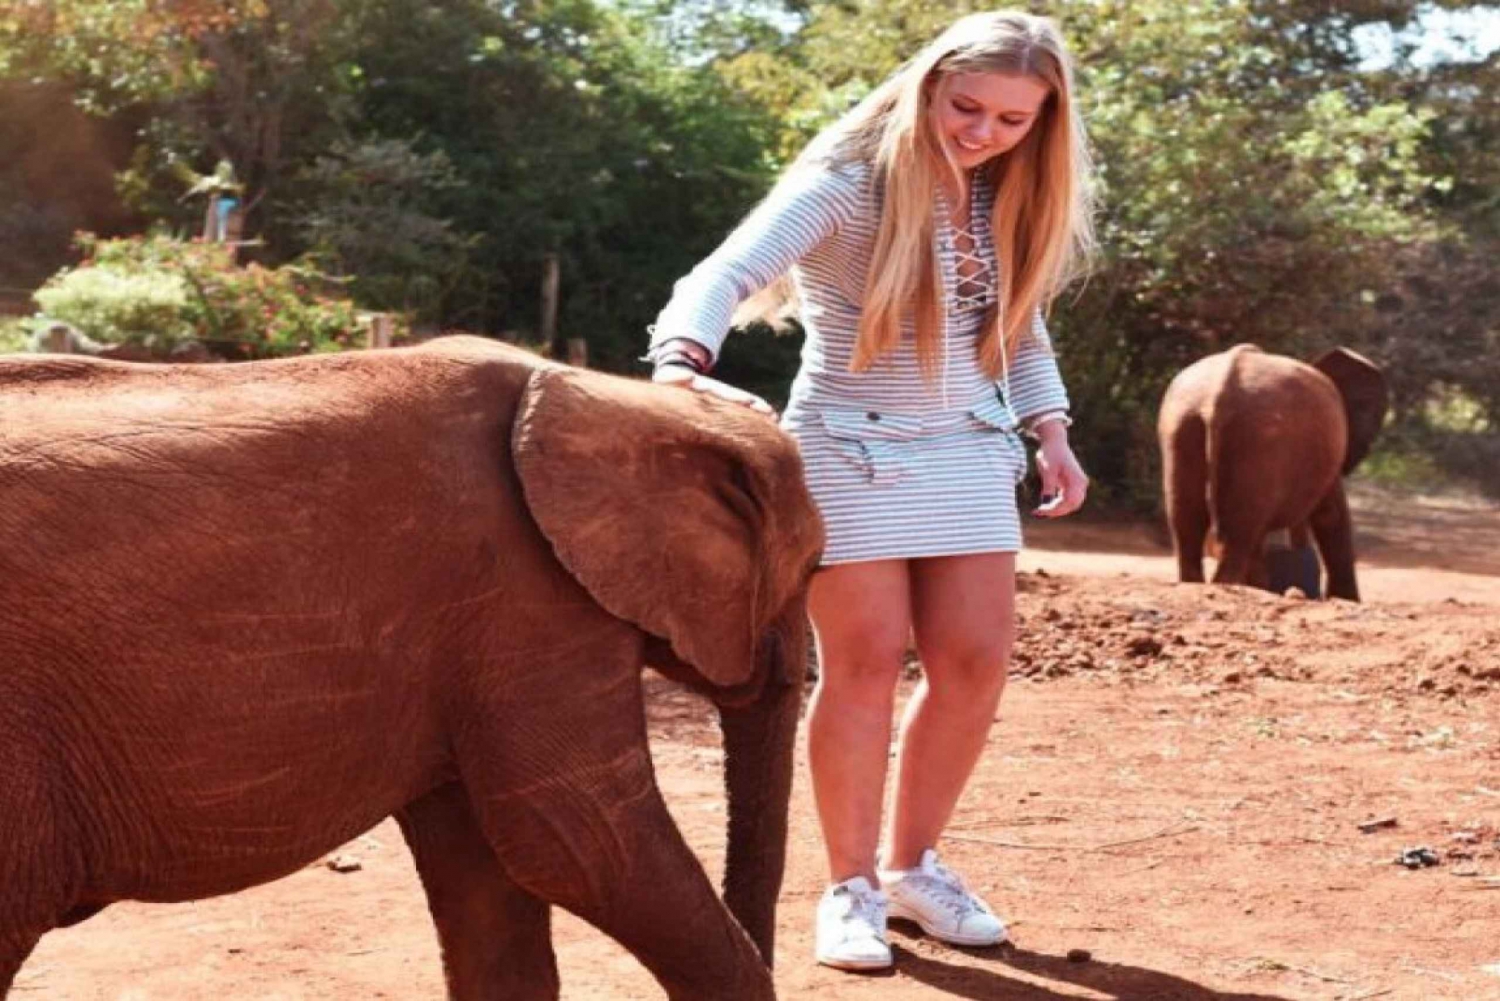 Besök på David Sheldrick Elephant Orphanage